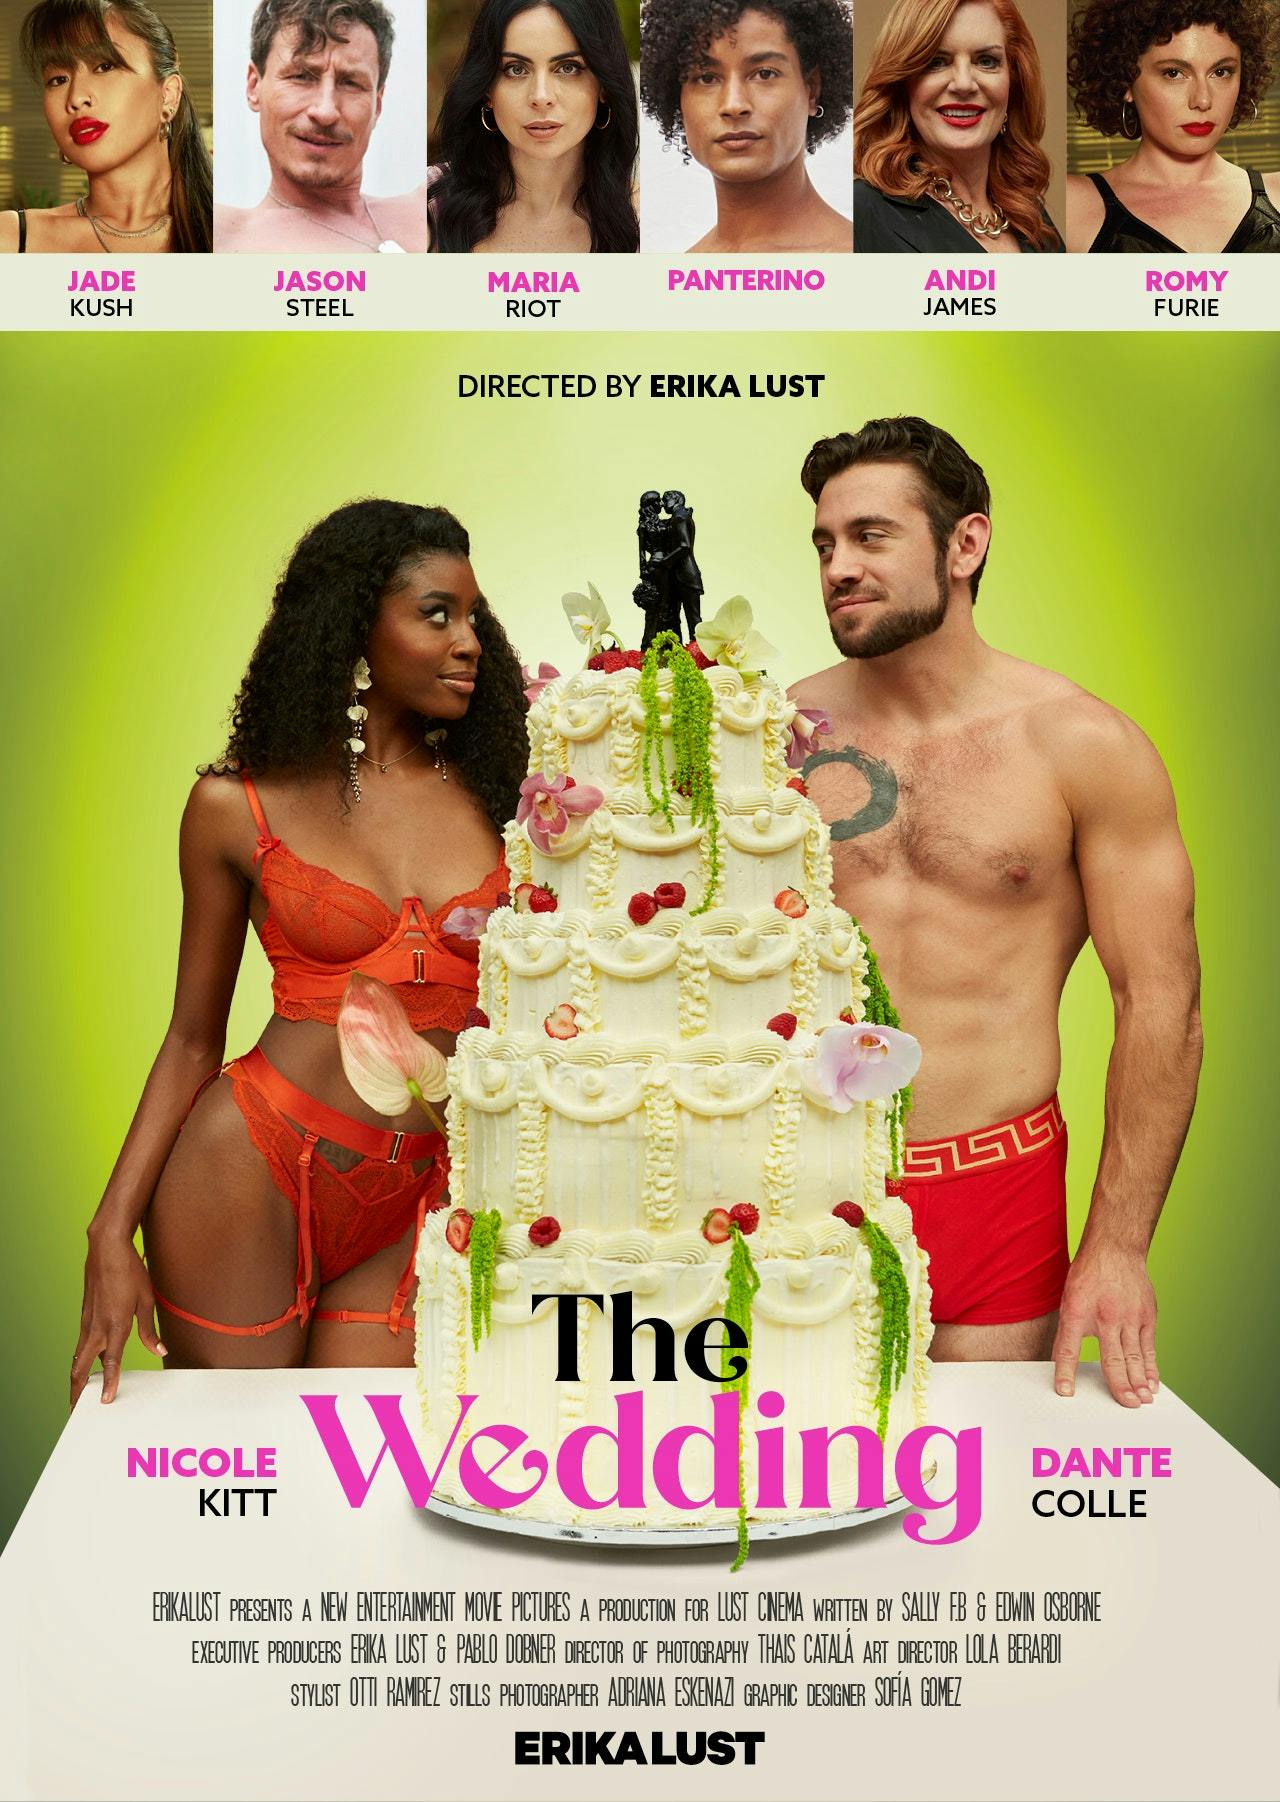 Wedin Sex Dowunlod - The Wedding porn film by Erika Lust | Erika Lust Porn World